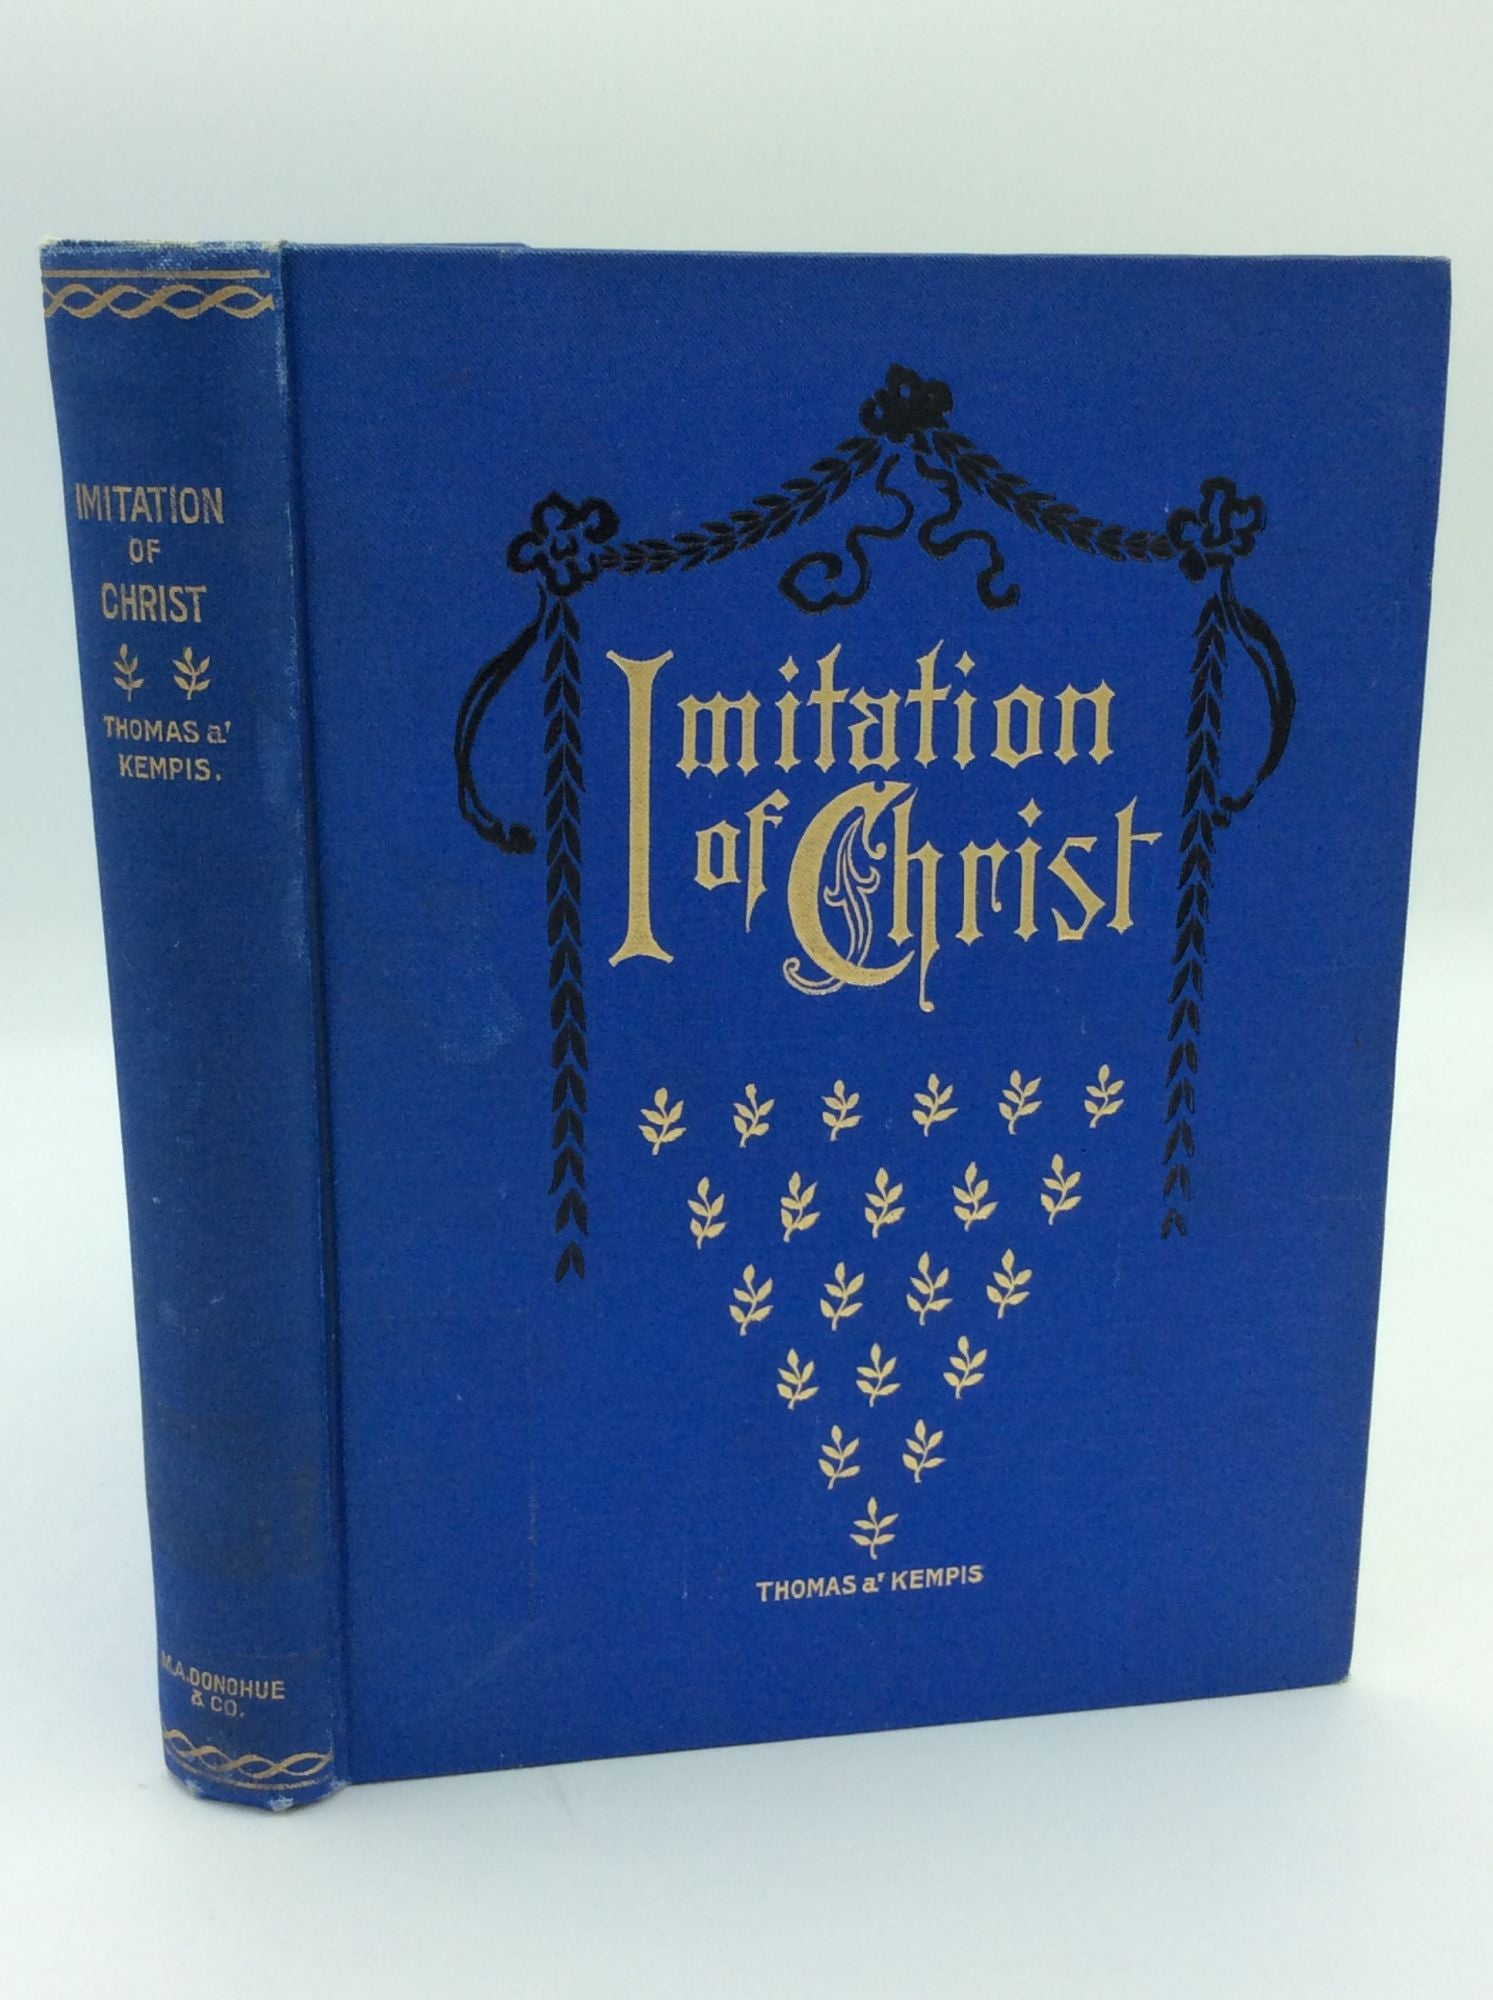 OF THE IMITATION OF CHRIST by Thomas A. Kempis on Kubik Fine Books Ltd